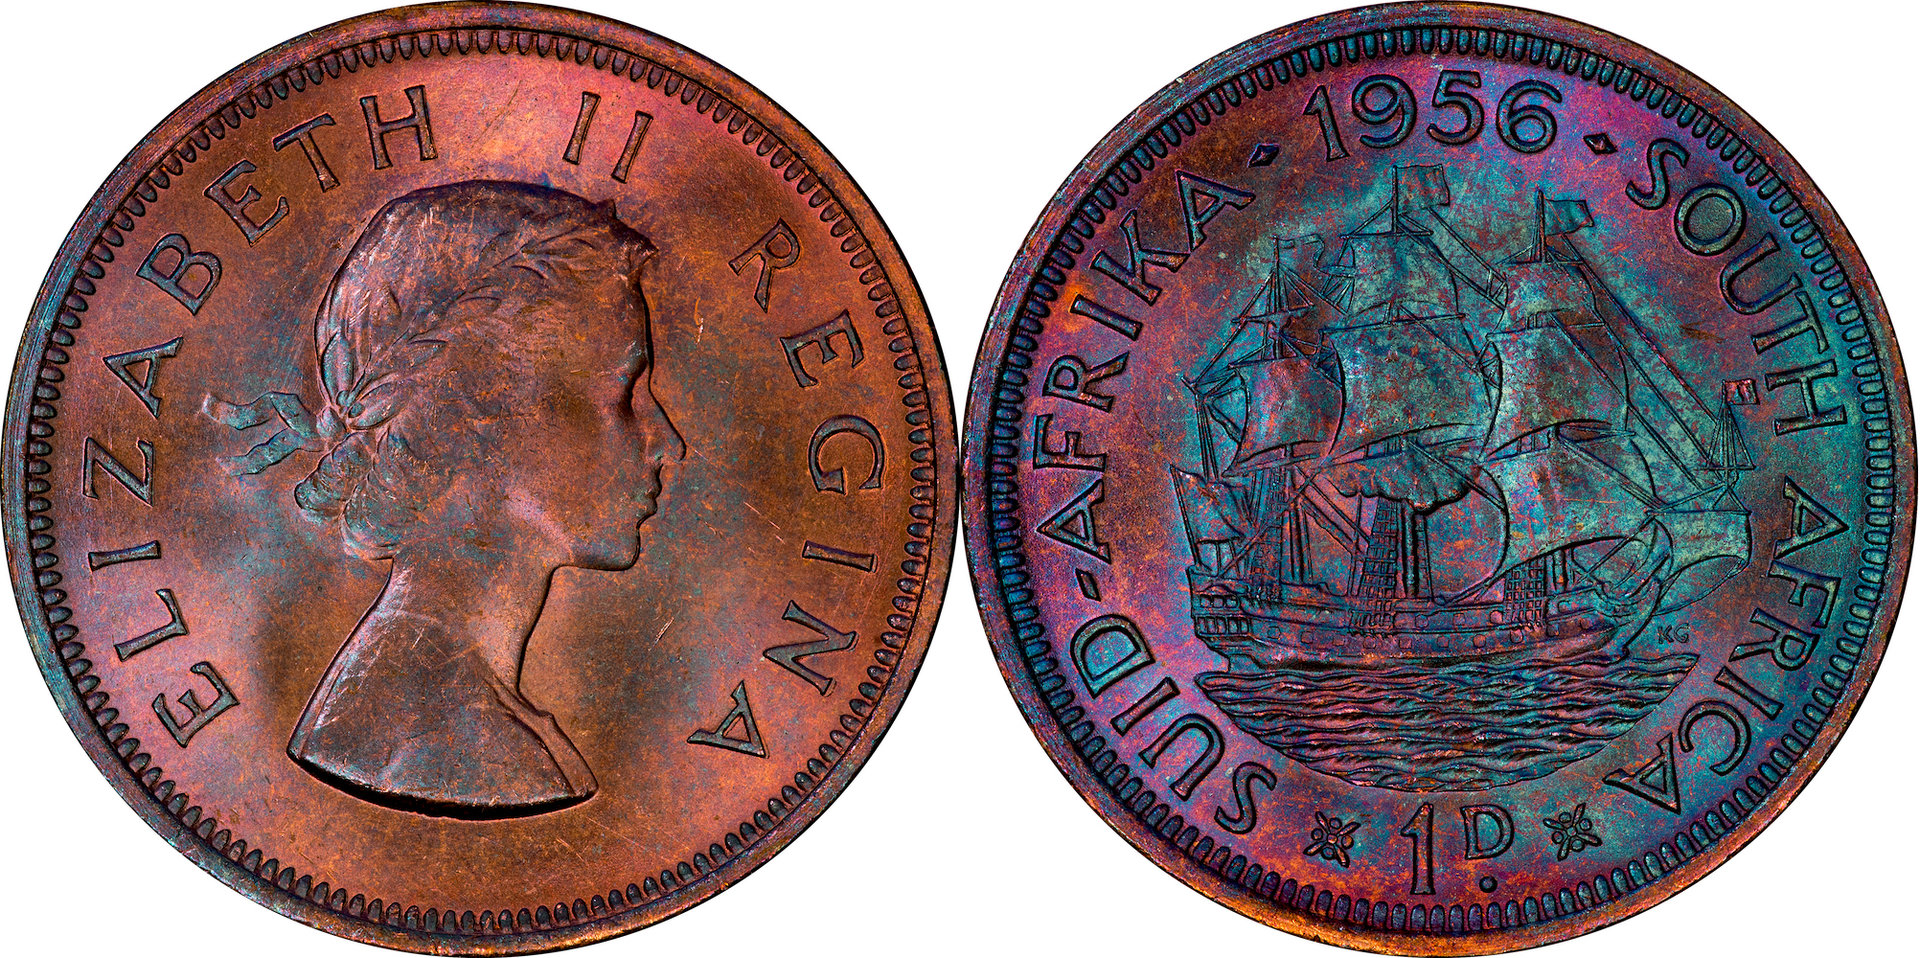 South Africa - 1956 1 Penny.jpg